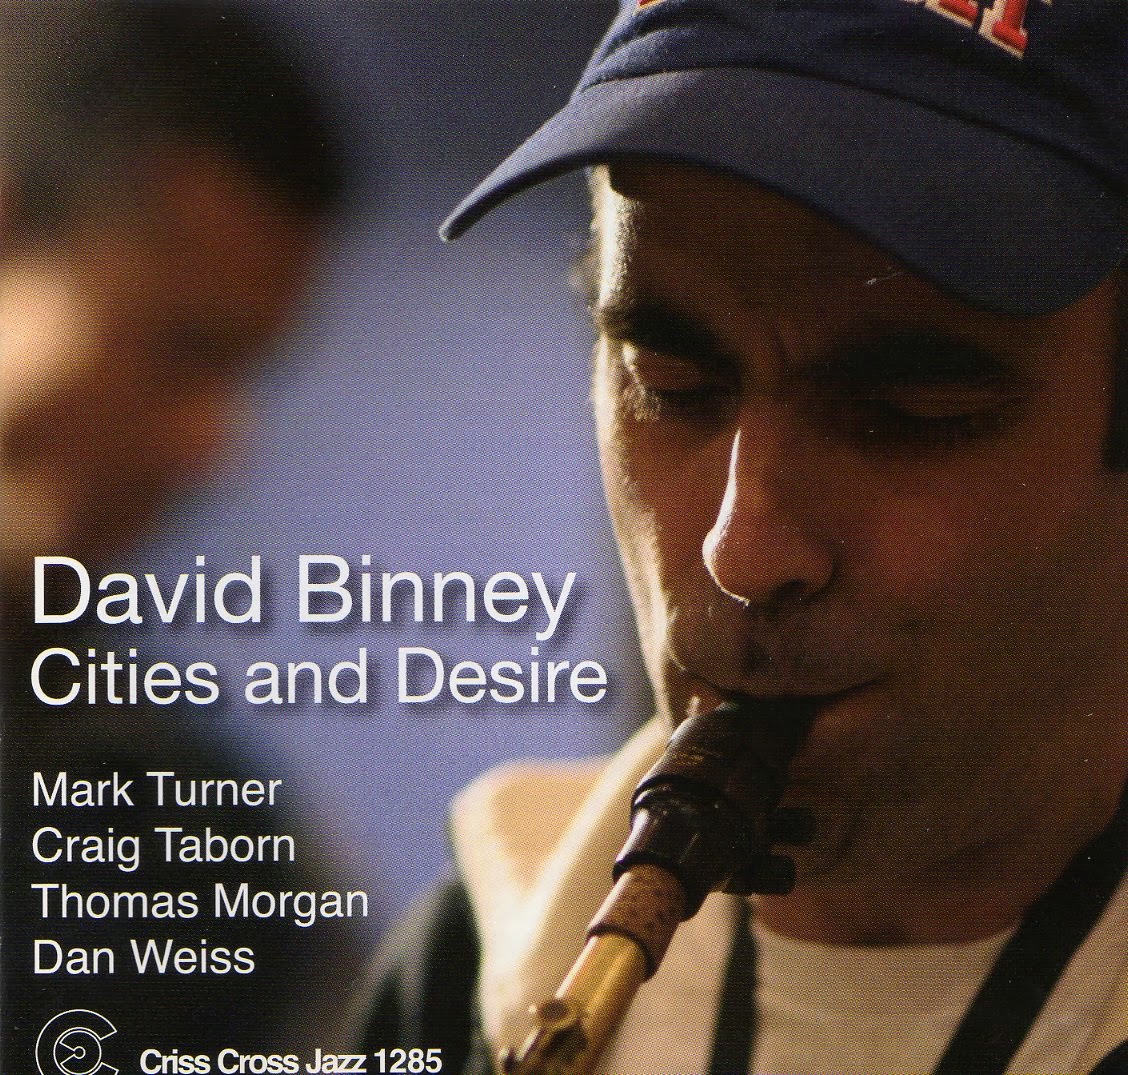 DAVID BINNEY - Cities and Desire cover 